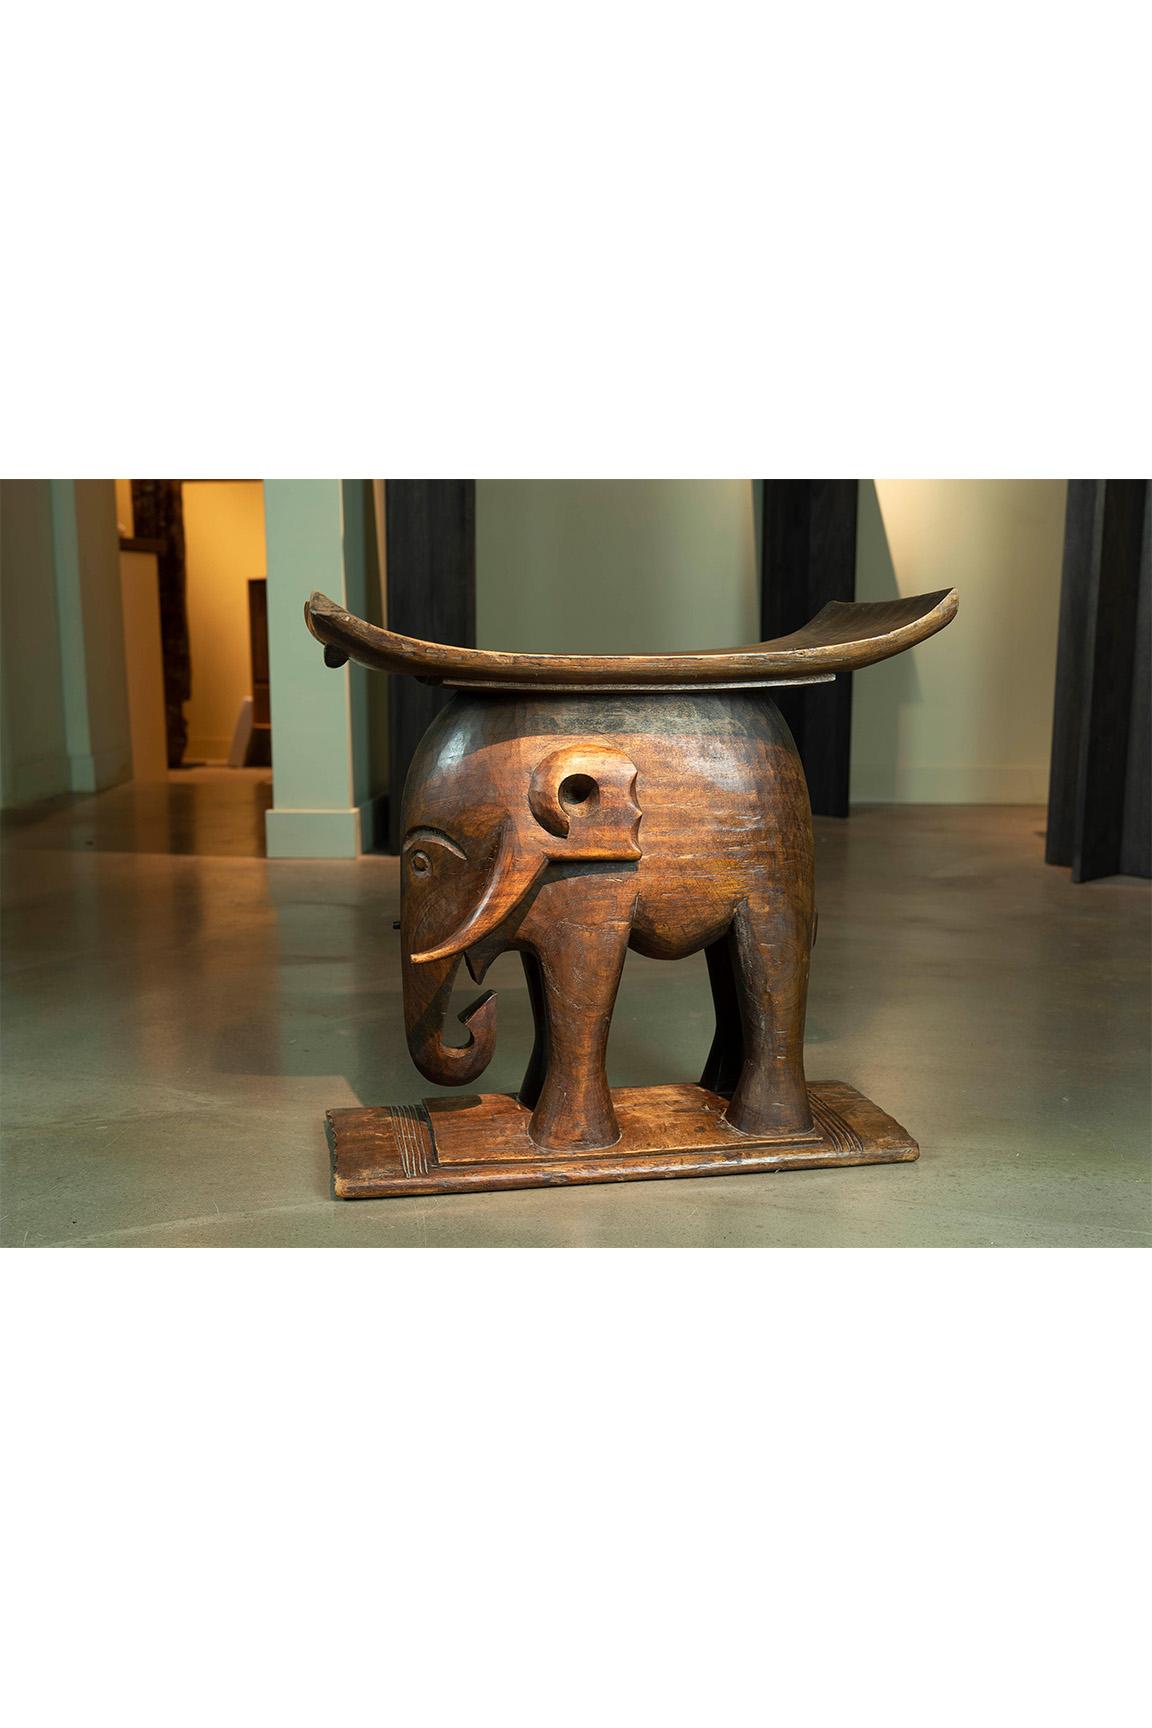 Early Twentieth-Century Prestige Elephant Stool  In Good Condition For Sale In London, GB